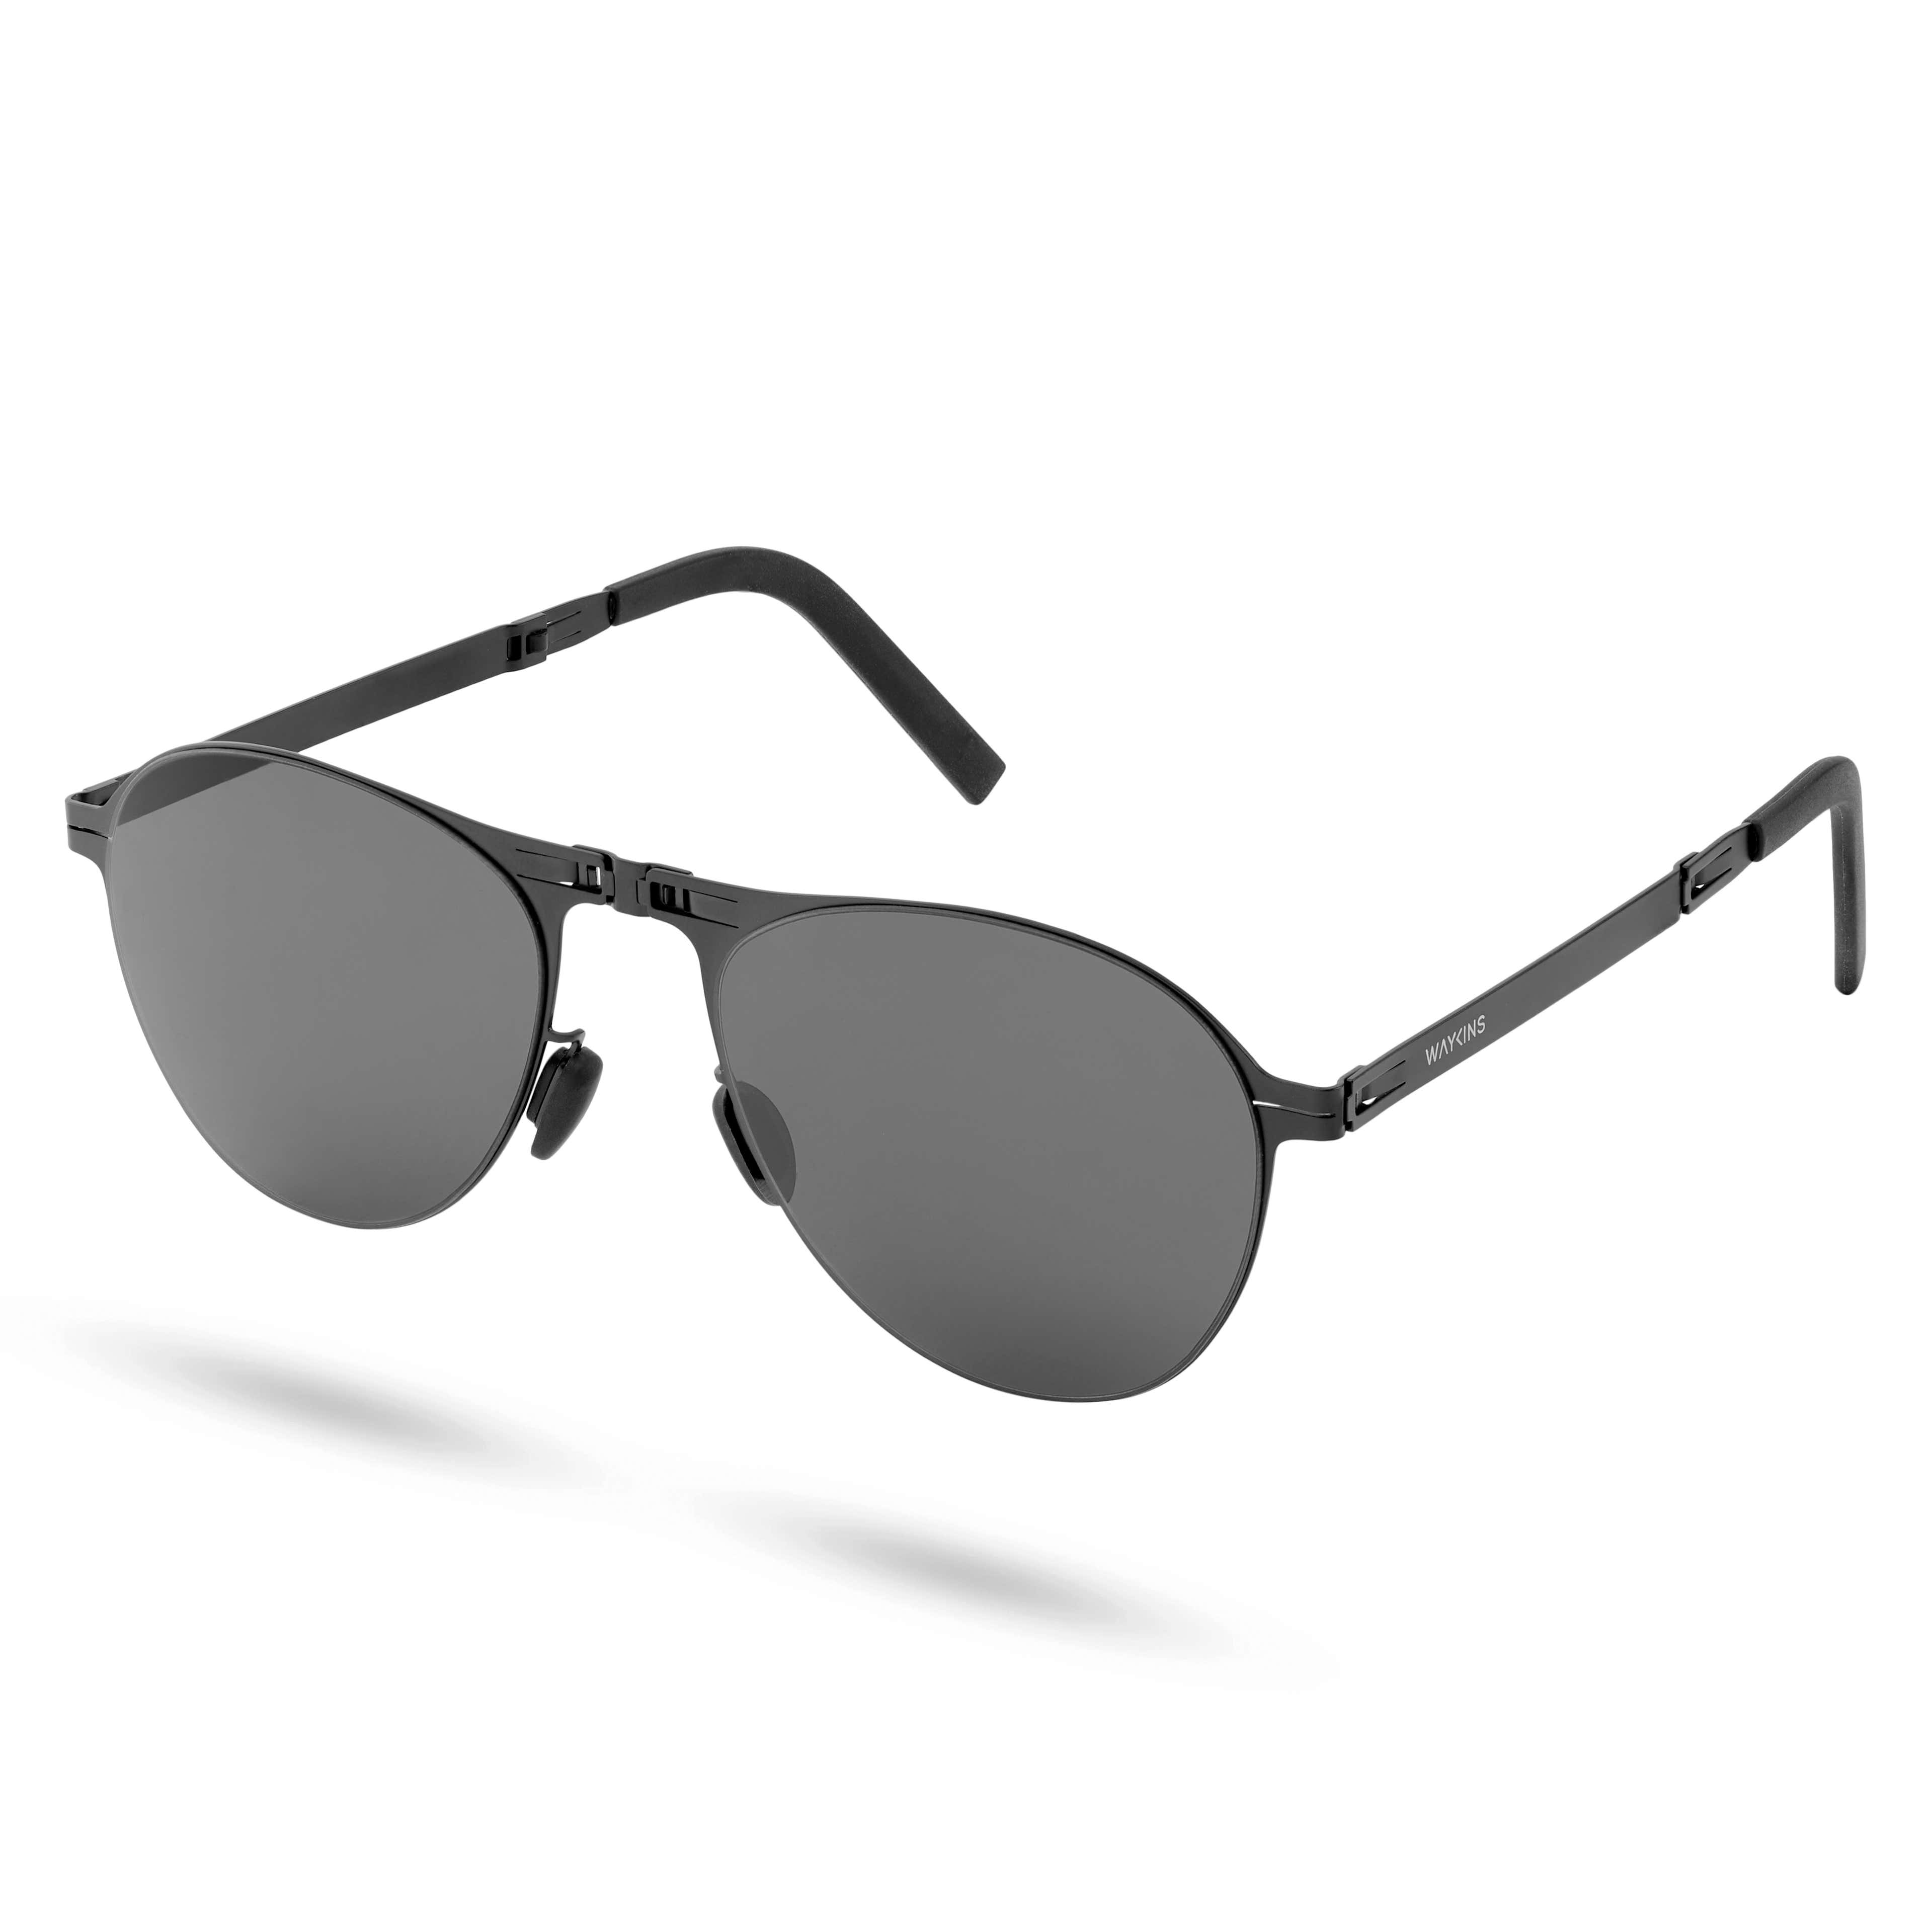 Whitmore Thea Black Folding Sunglasses